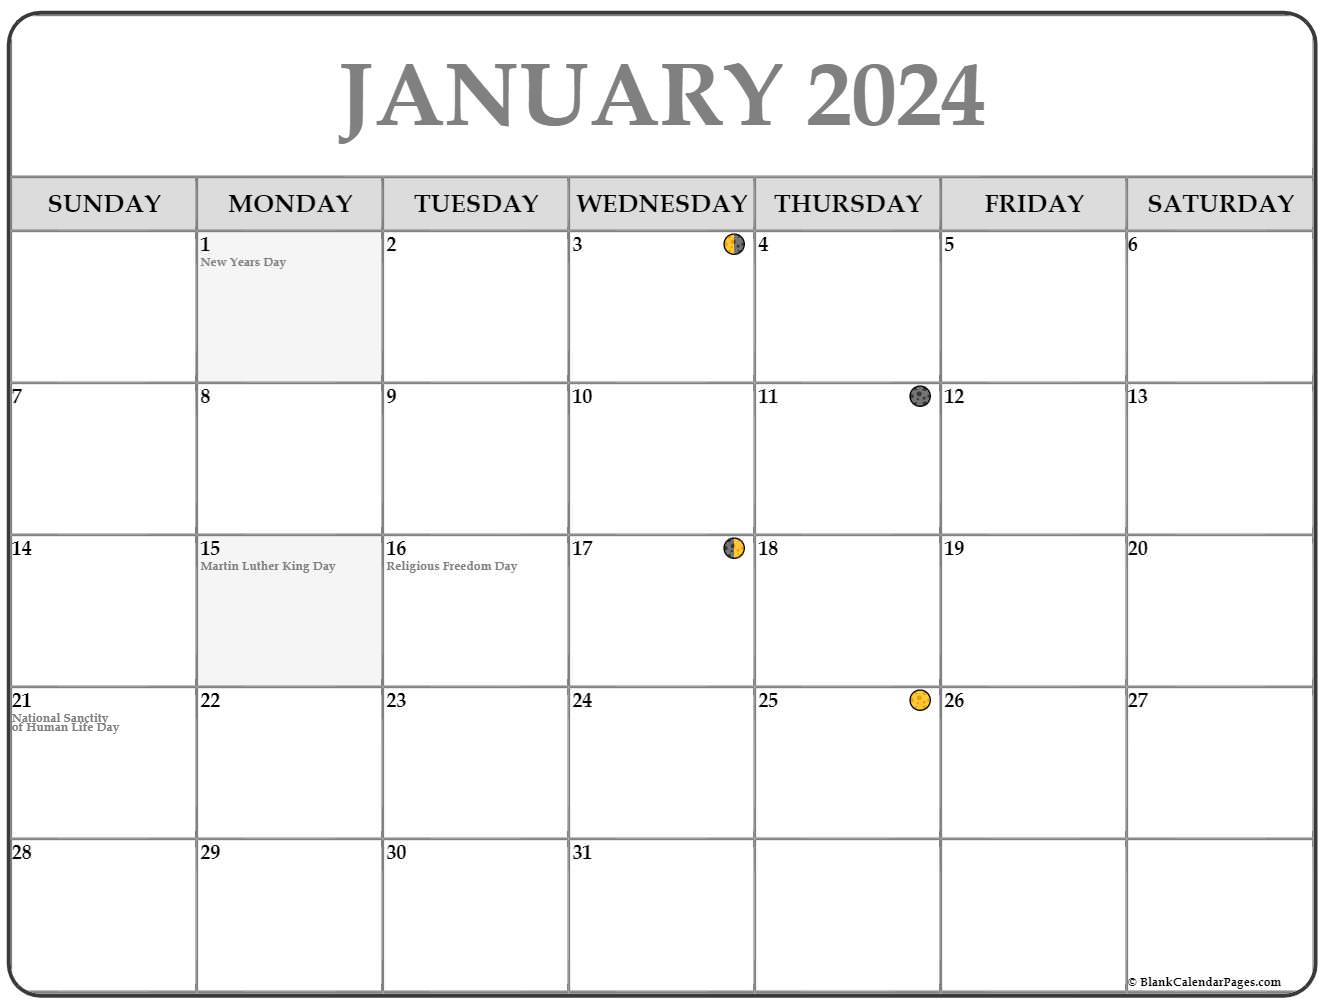 January 2021 calendar | 56+ templates of 2021 printable calendars